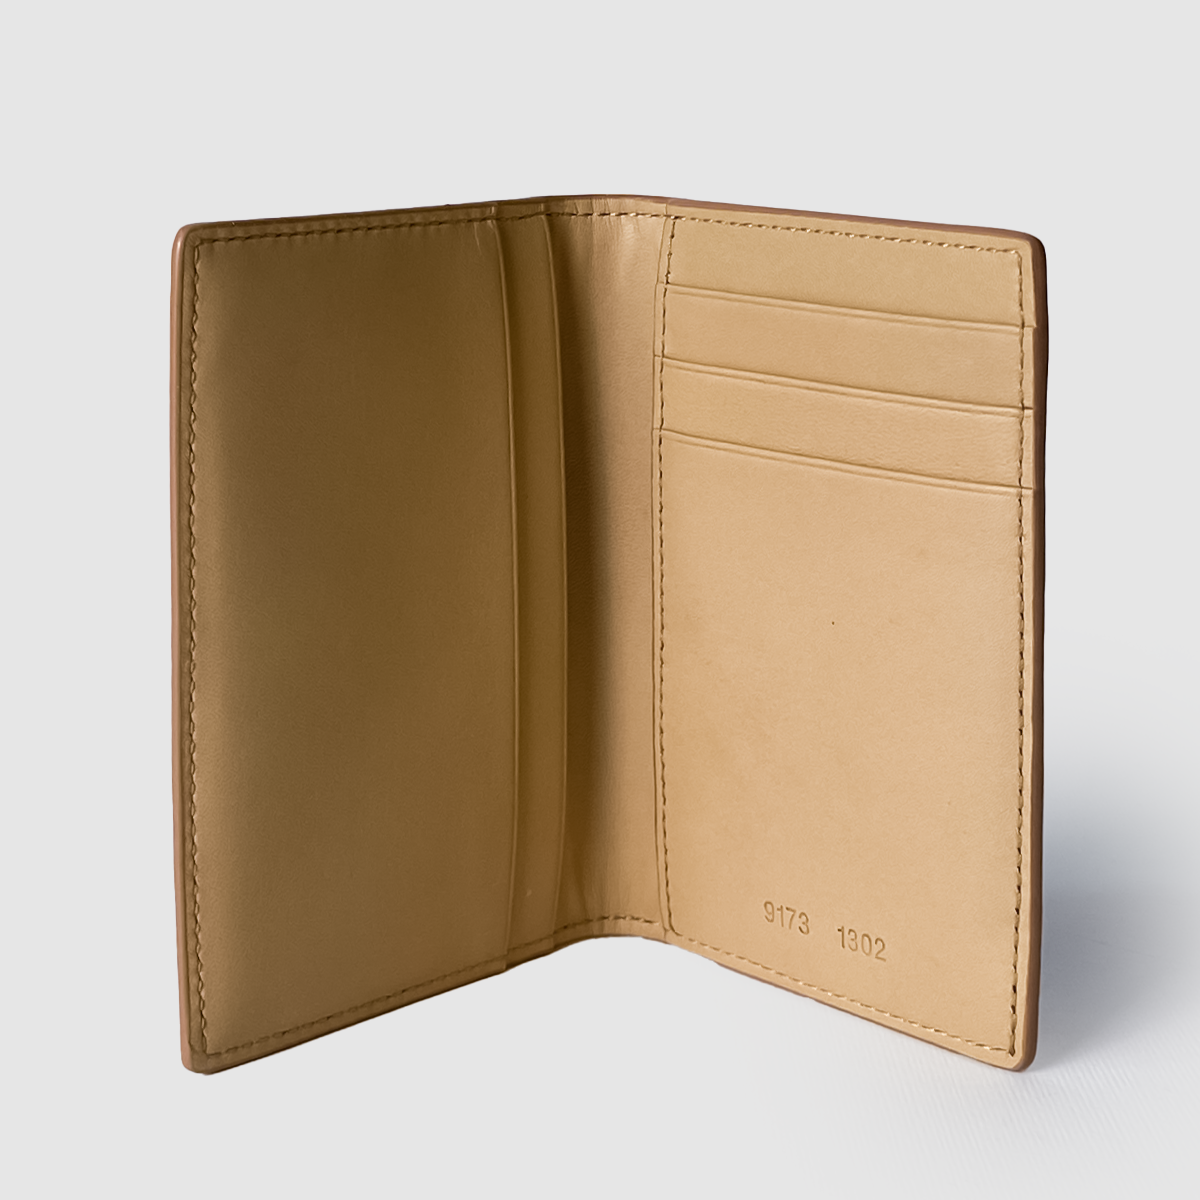 Folio Wallet 9173 - Tan